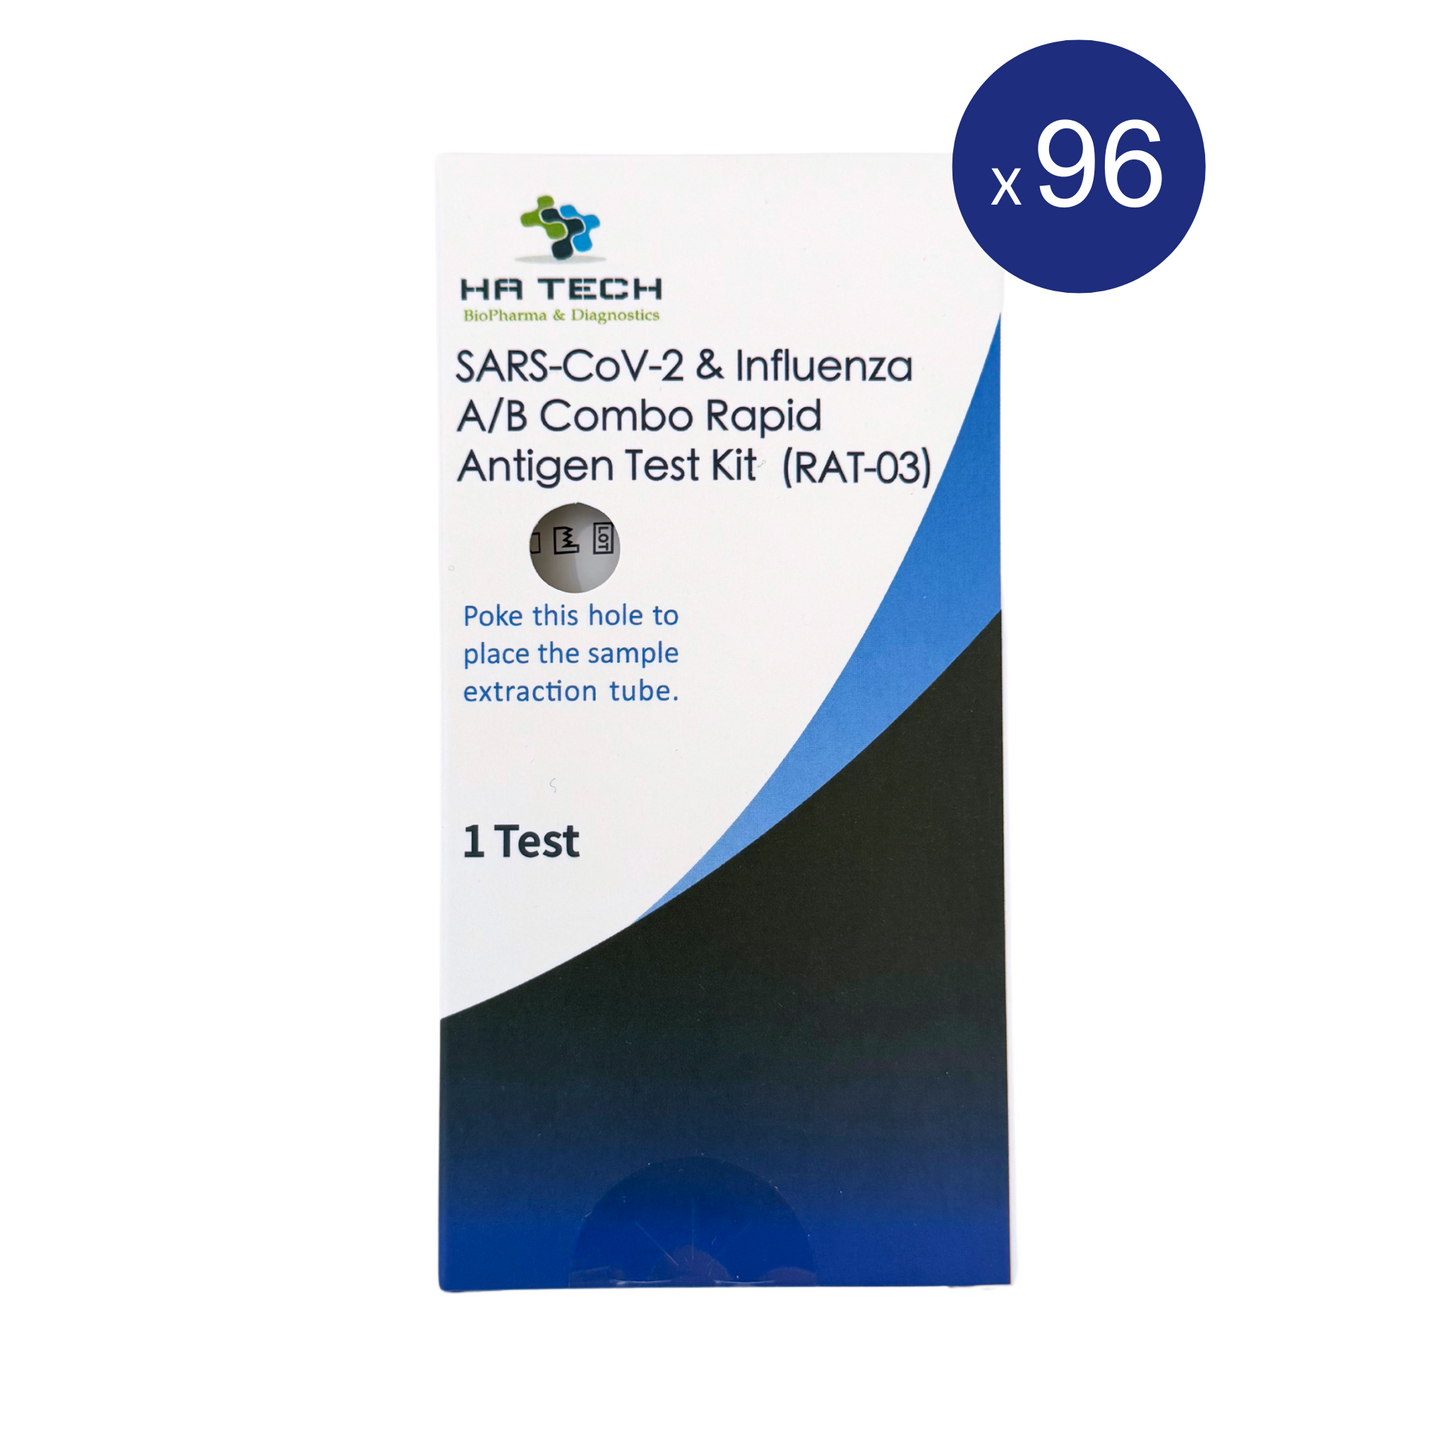 HA Tech SARS-CoV-2 & Influenza A/B Combo Rapid Test Carton - Single Pack x 96 (96pc)